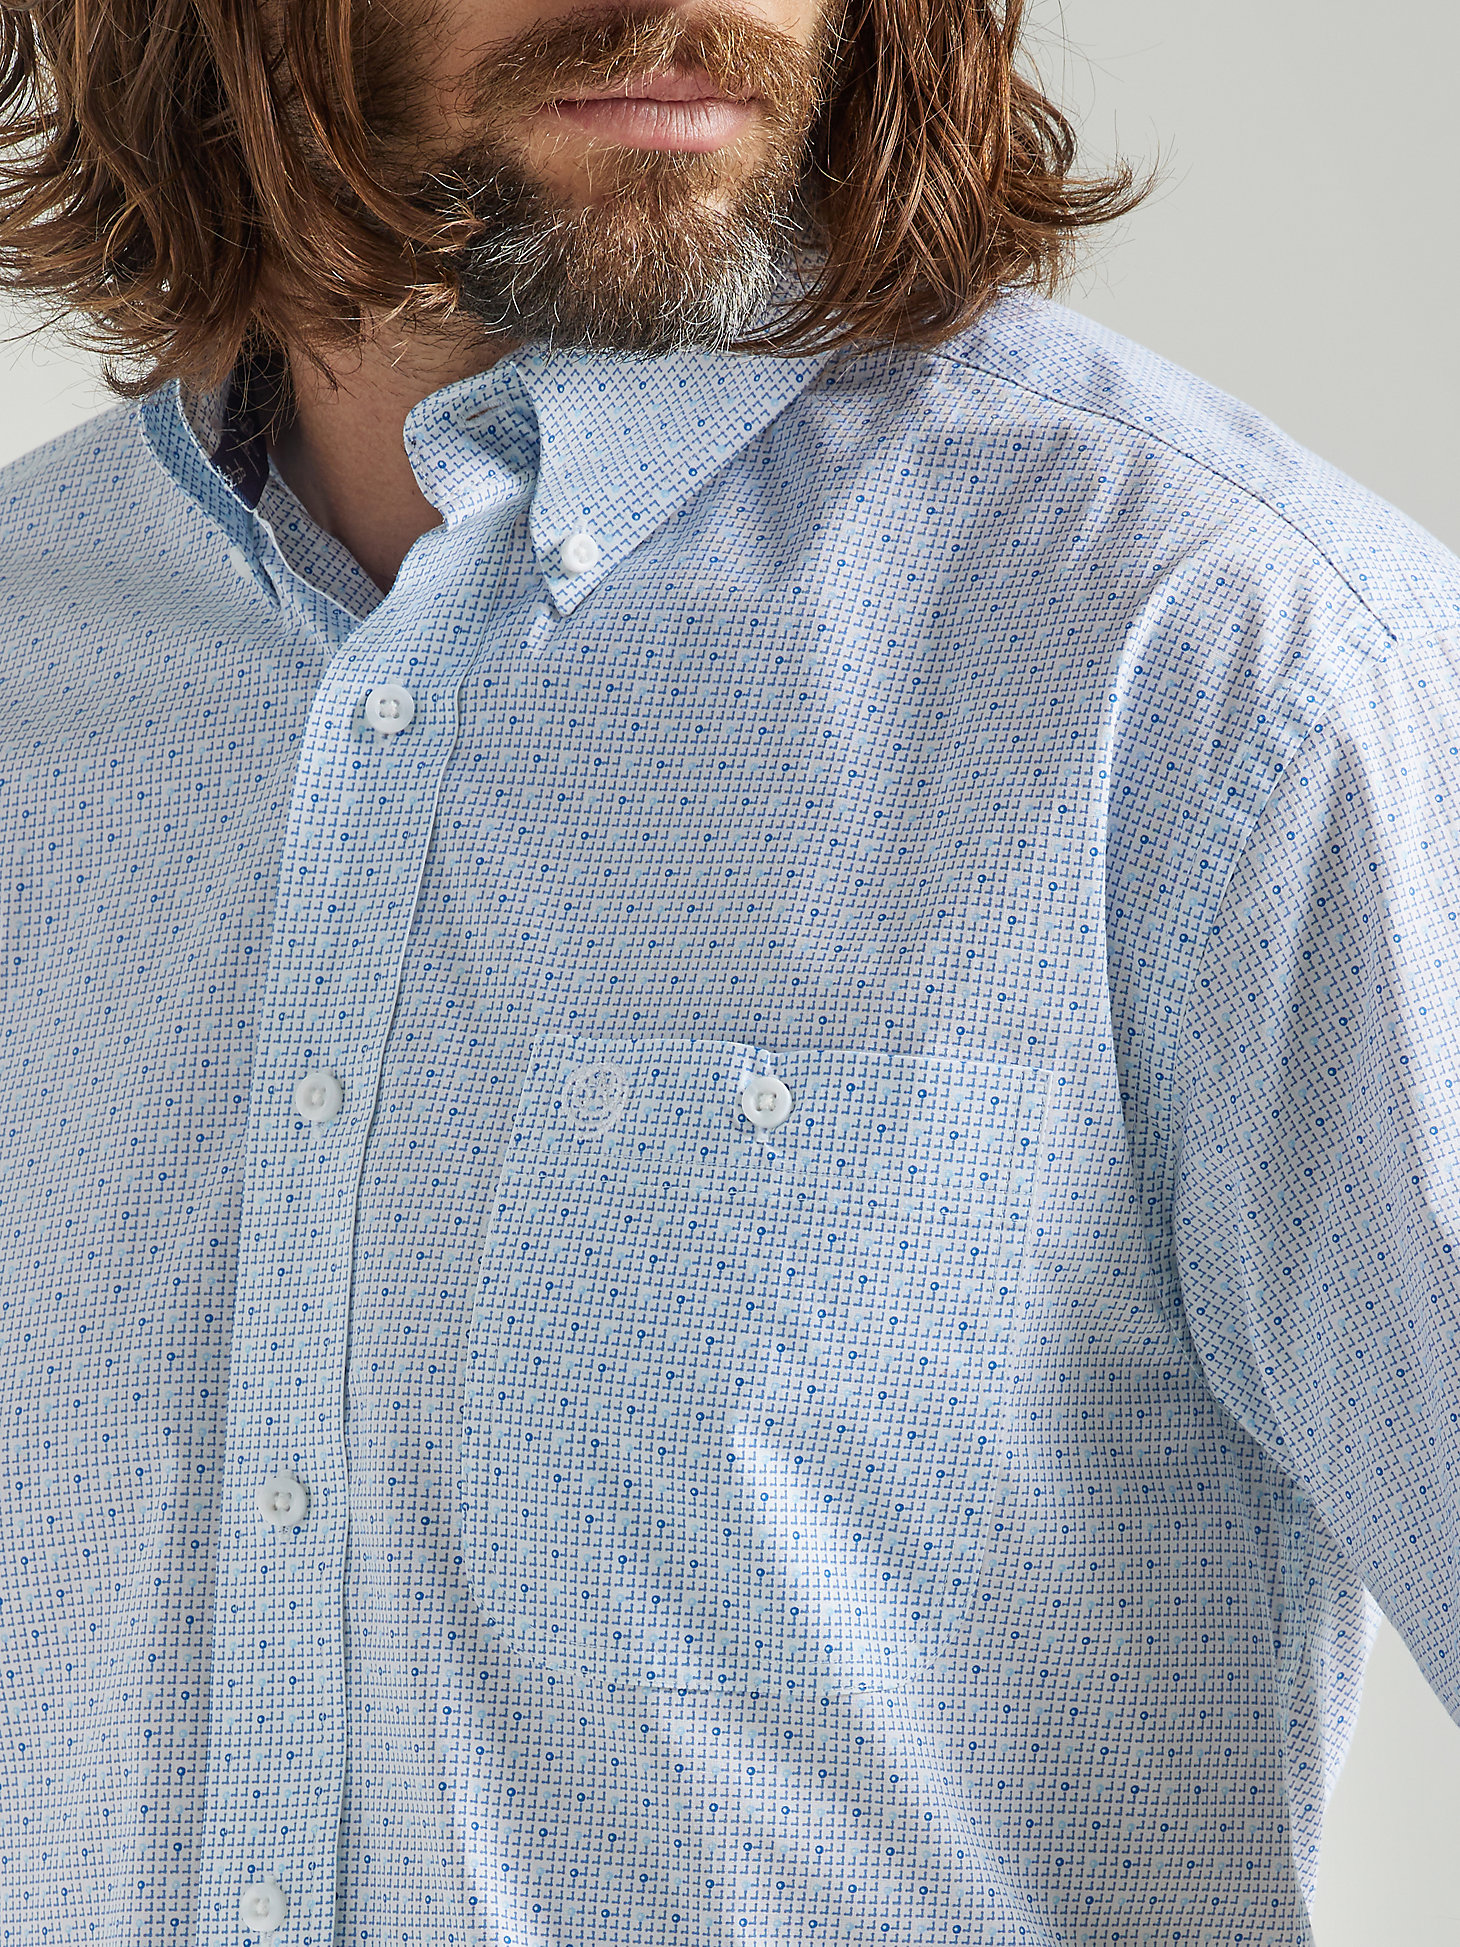 Men's George Strait® Short Sleeve Button Down One Pocket Print Shirt in Baby Blue alternative view 2